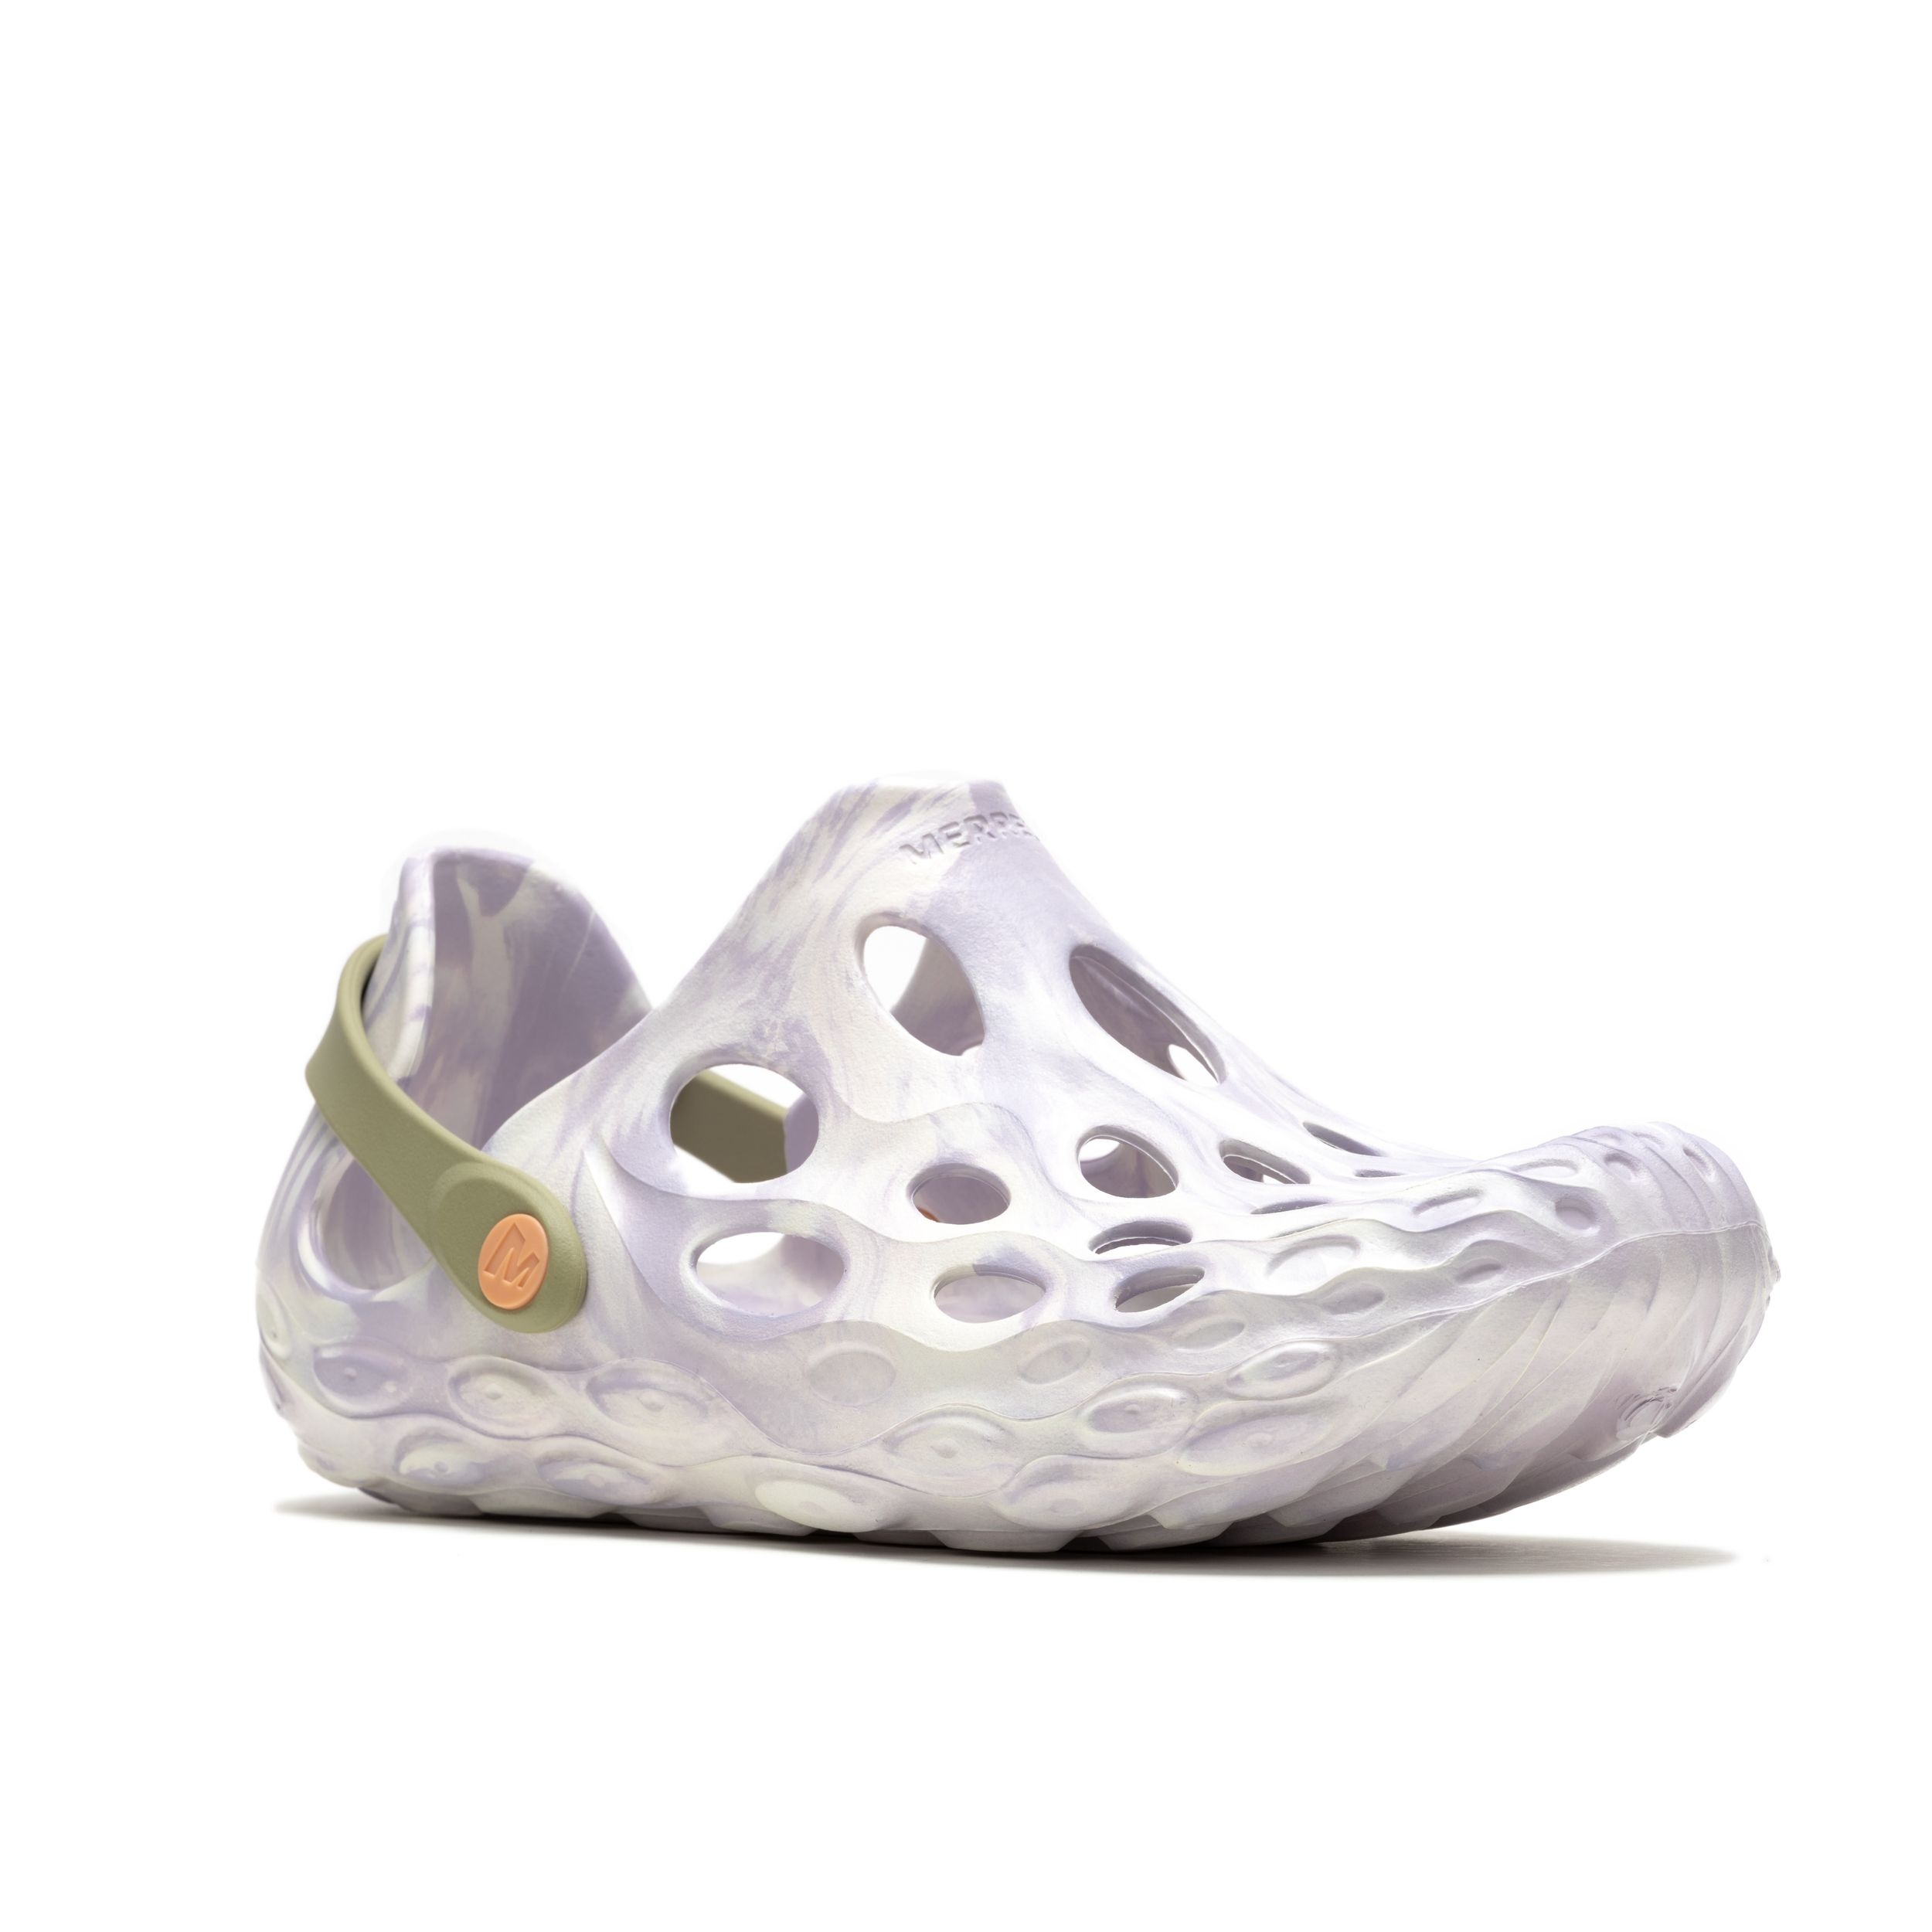 Merrell Women's Hydro Moc Shoes, Sandals | SportChek